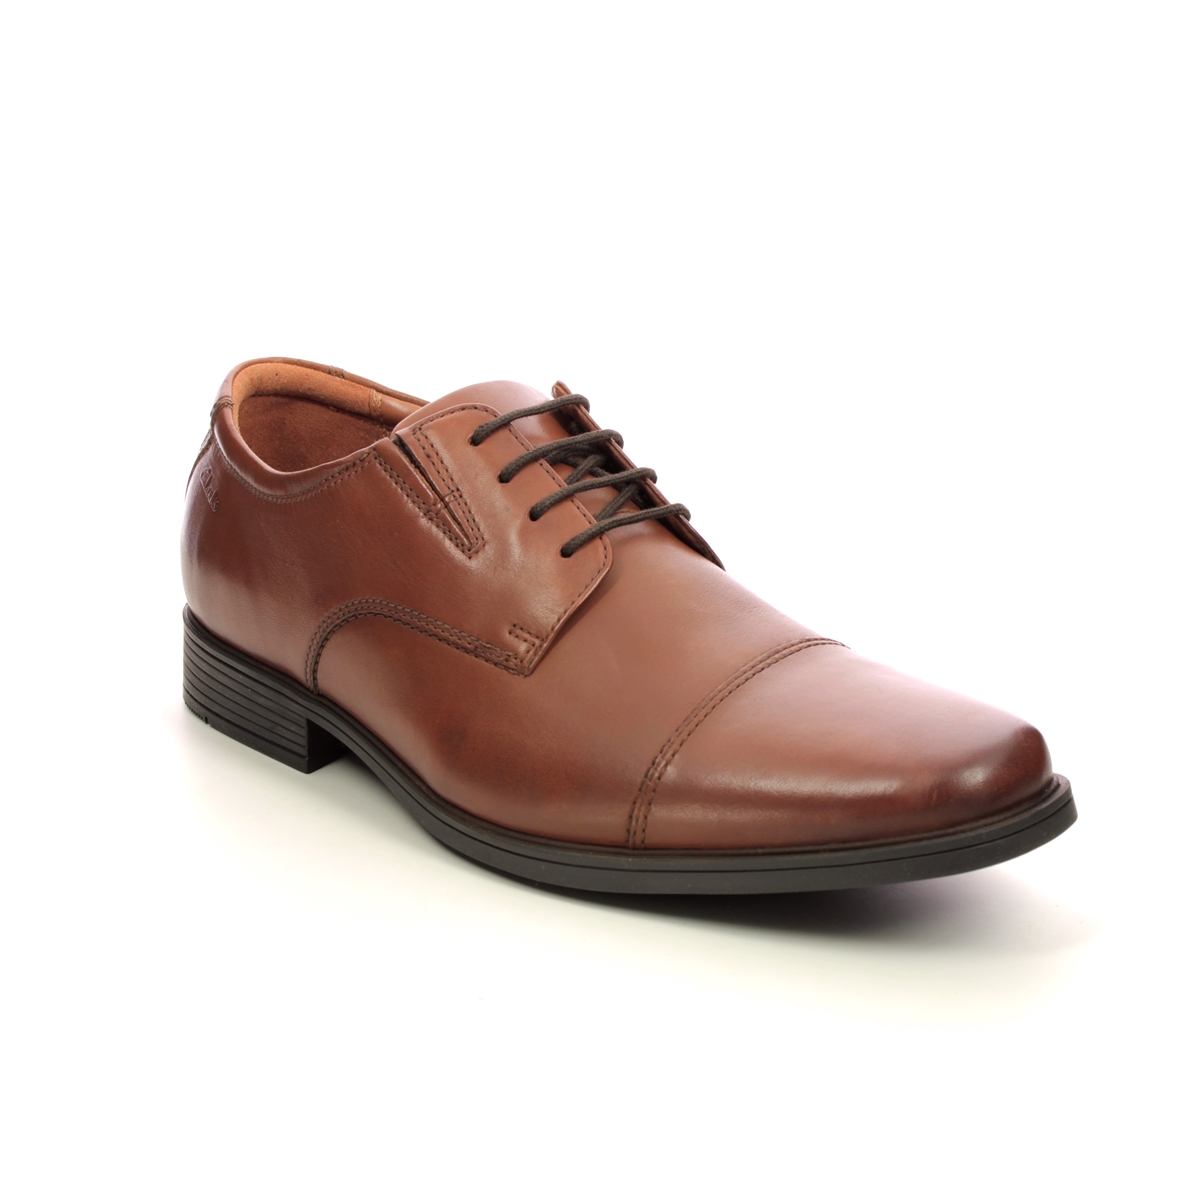 Clarks Tilden Cap Dark Tan Mens Formal Shoes 300968H In Size 8 In Plain Dark Tan H Width Fitting Extra Wide